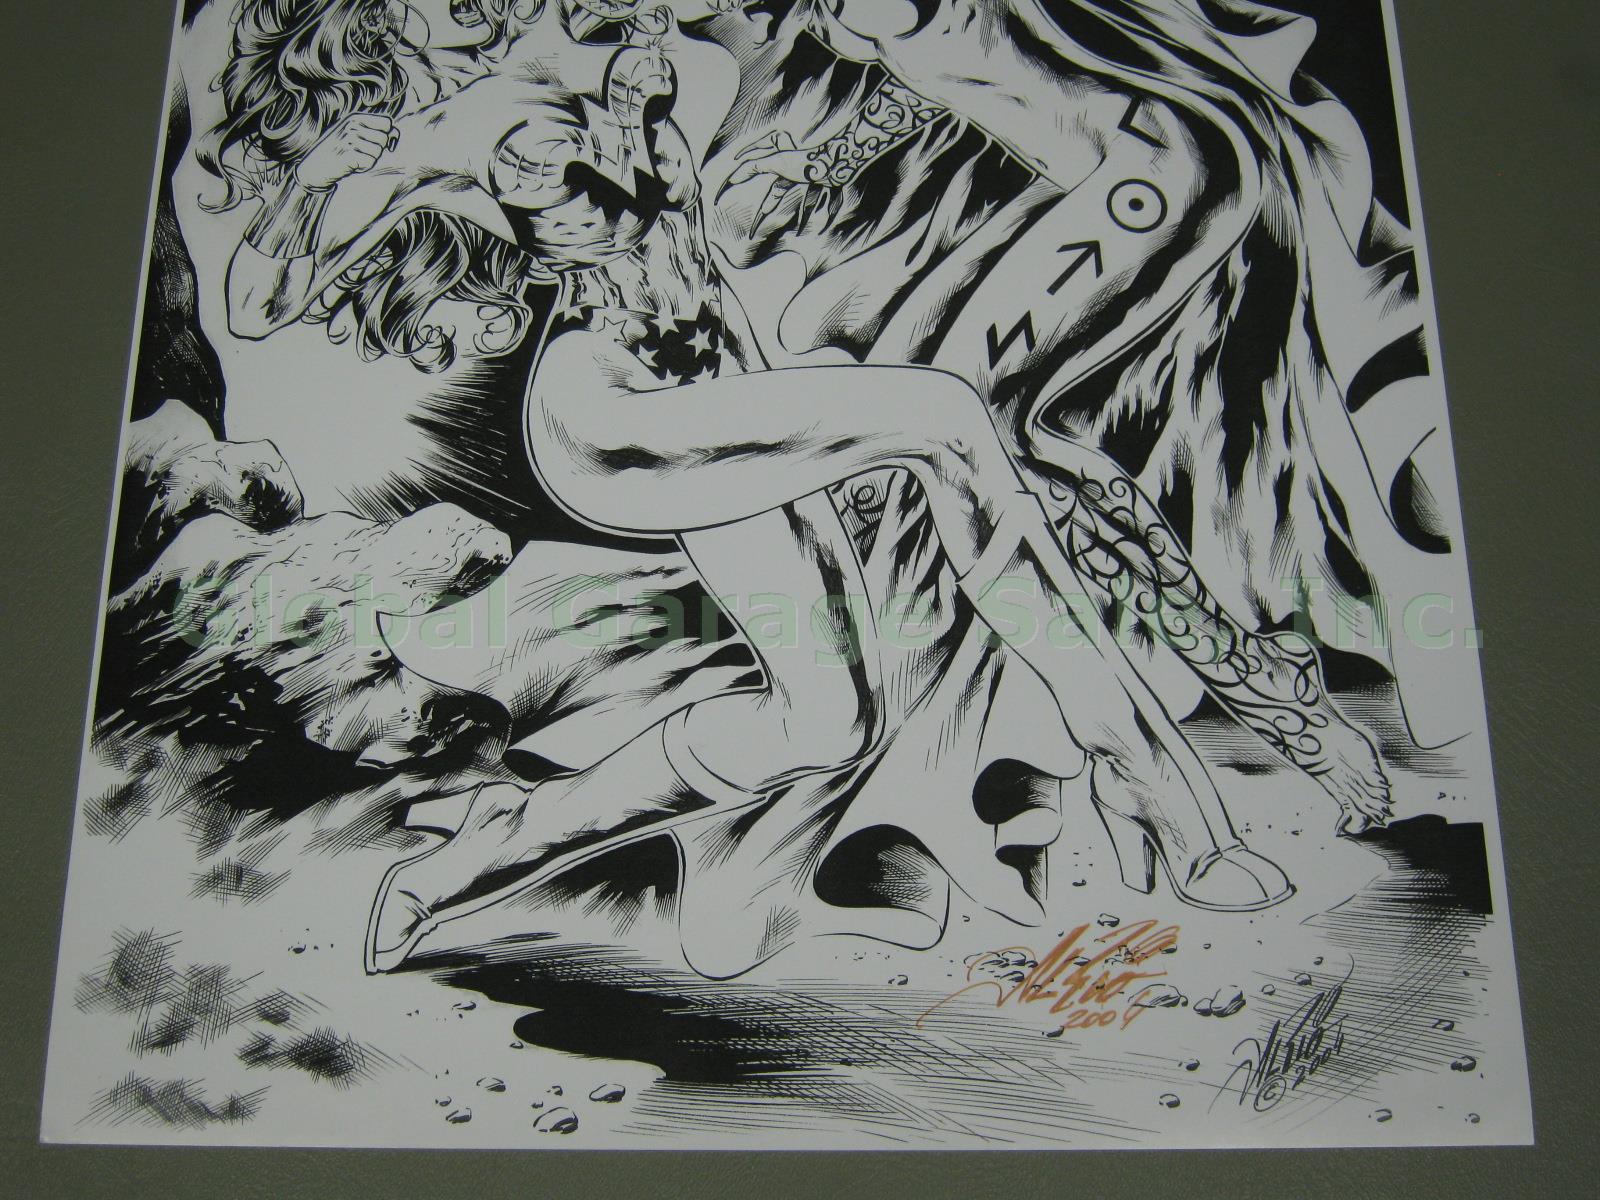 Rare Al Rio 2004 Wonder Woman vs Medusa Hand Signed Comic Book Art Print Poster 4